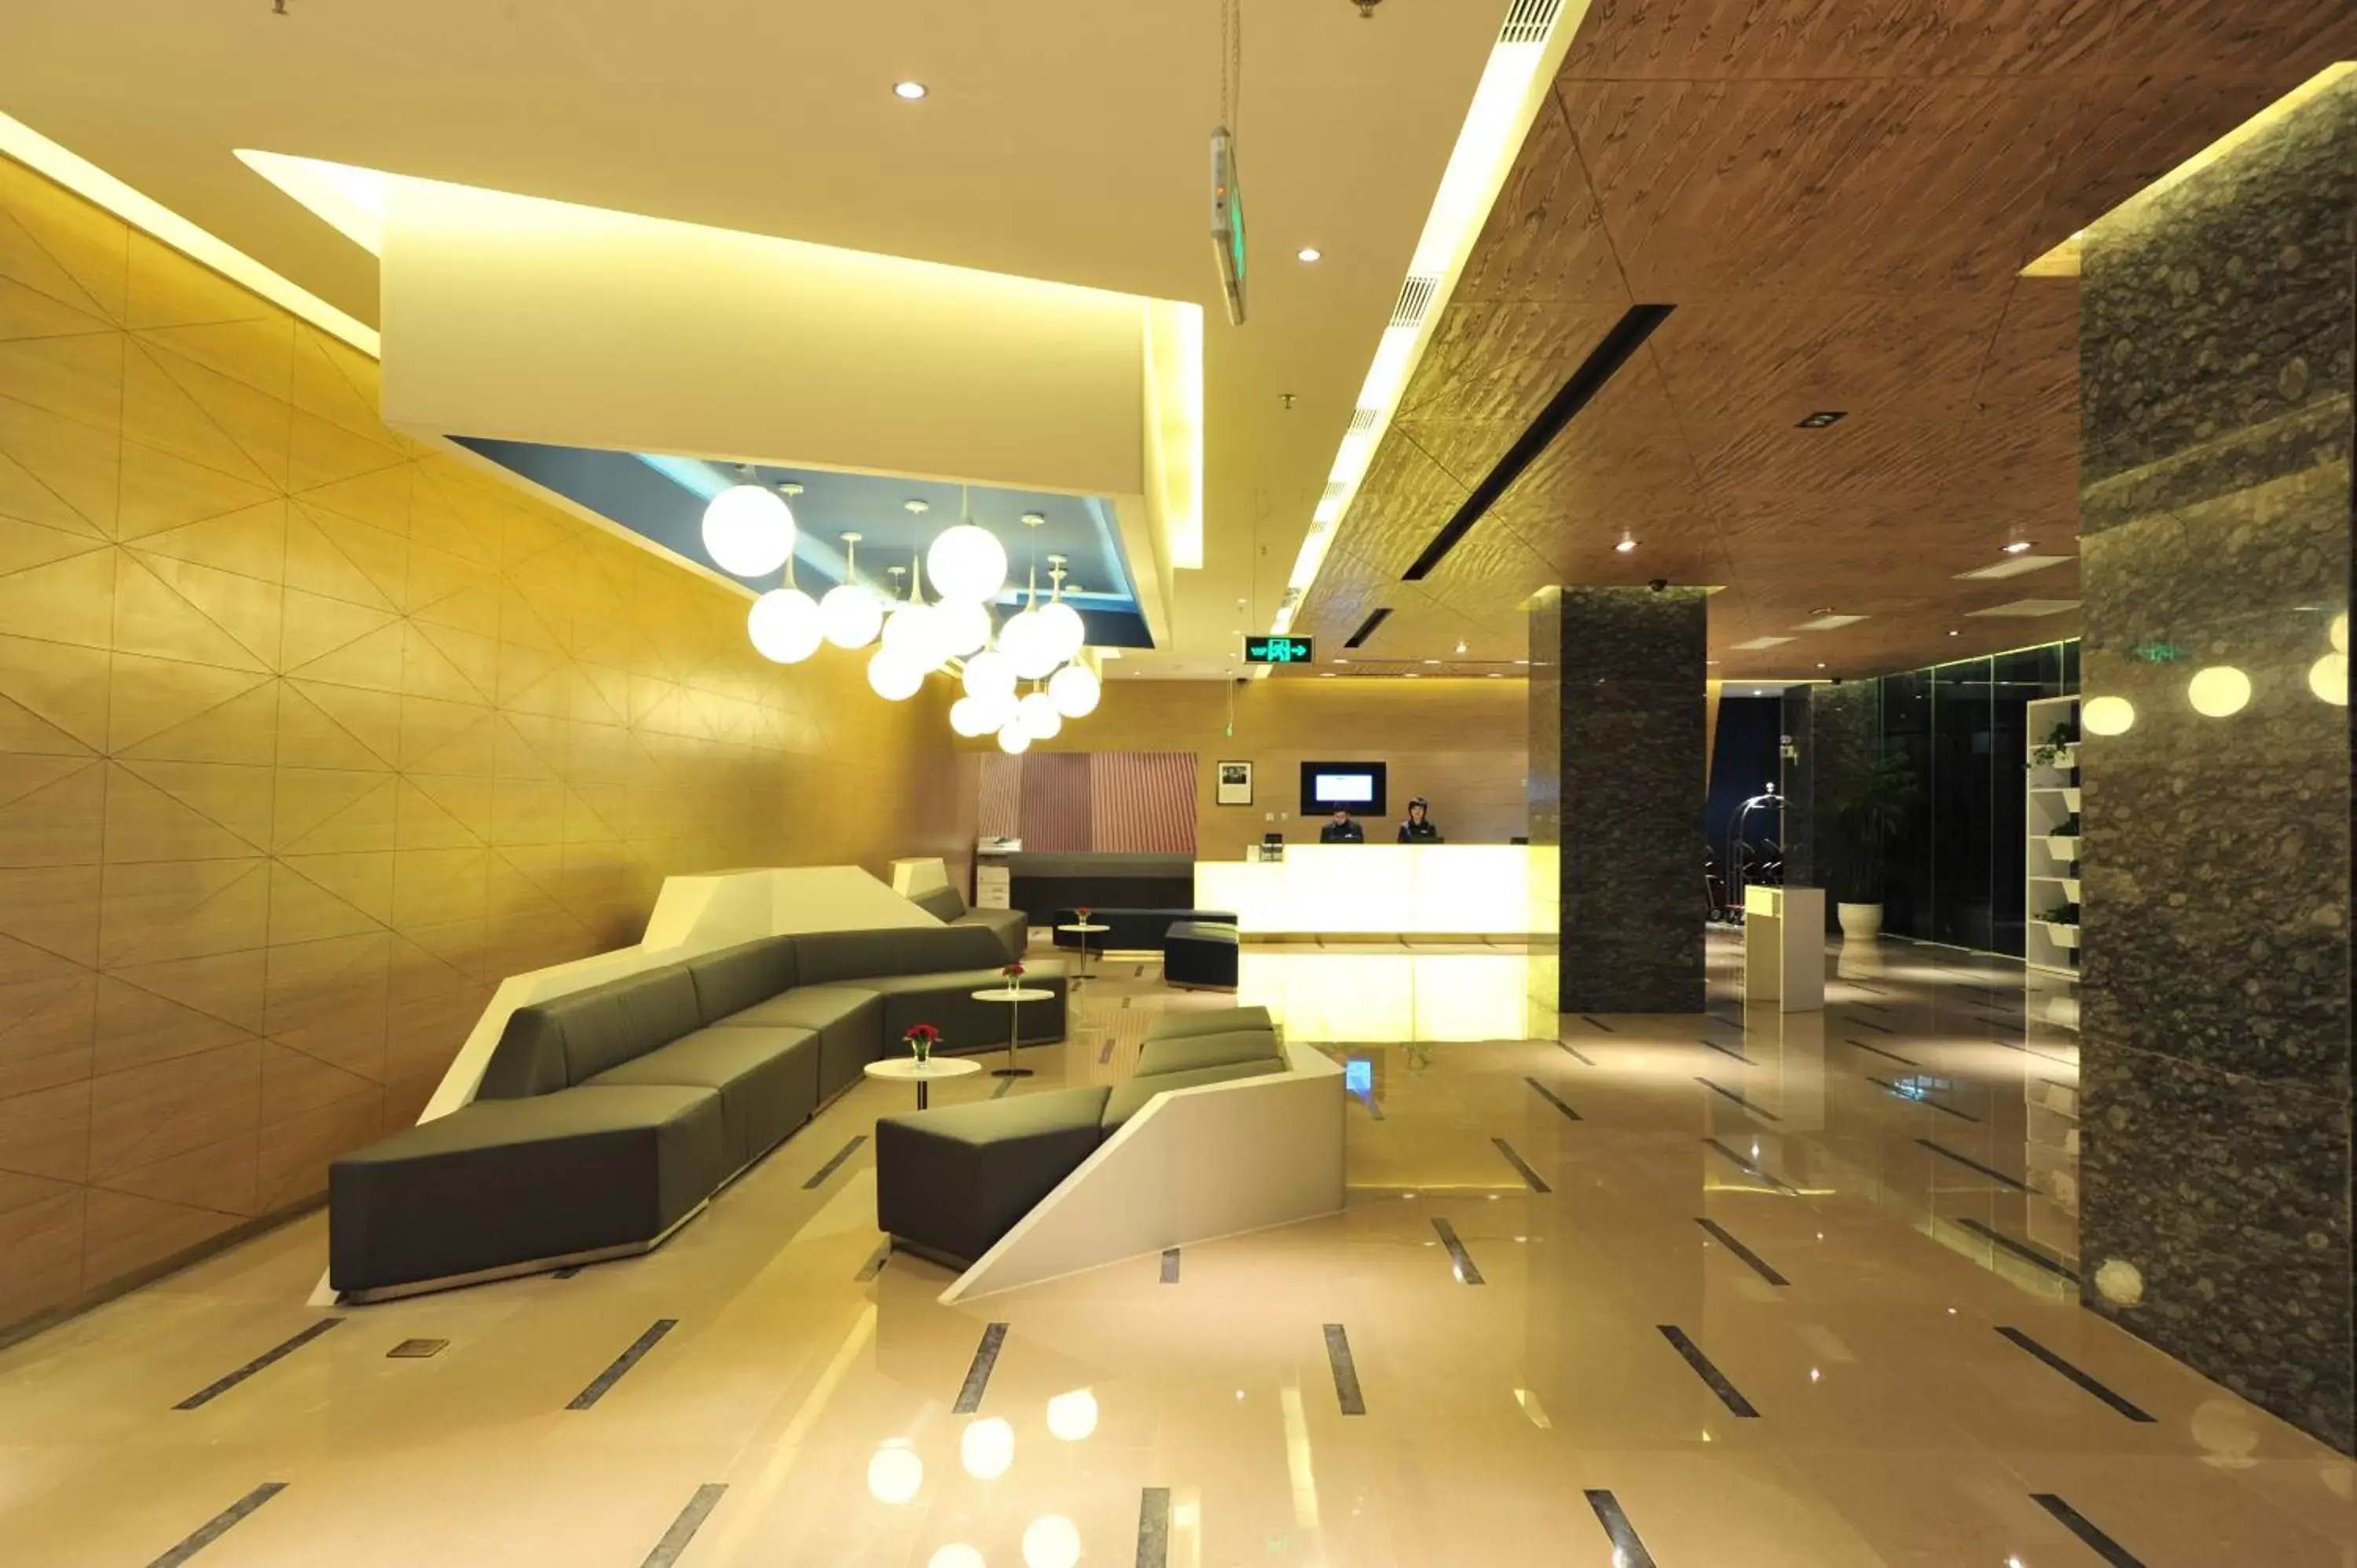 Lobby or reception in Shenzhen Novotel Watergate(Kingkey 100)